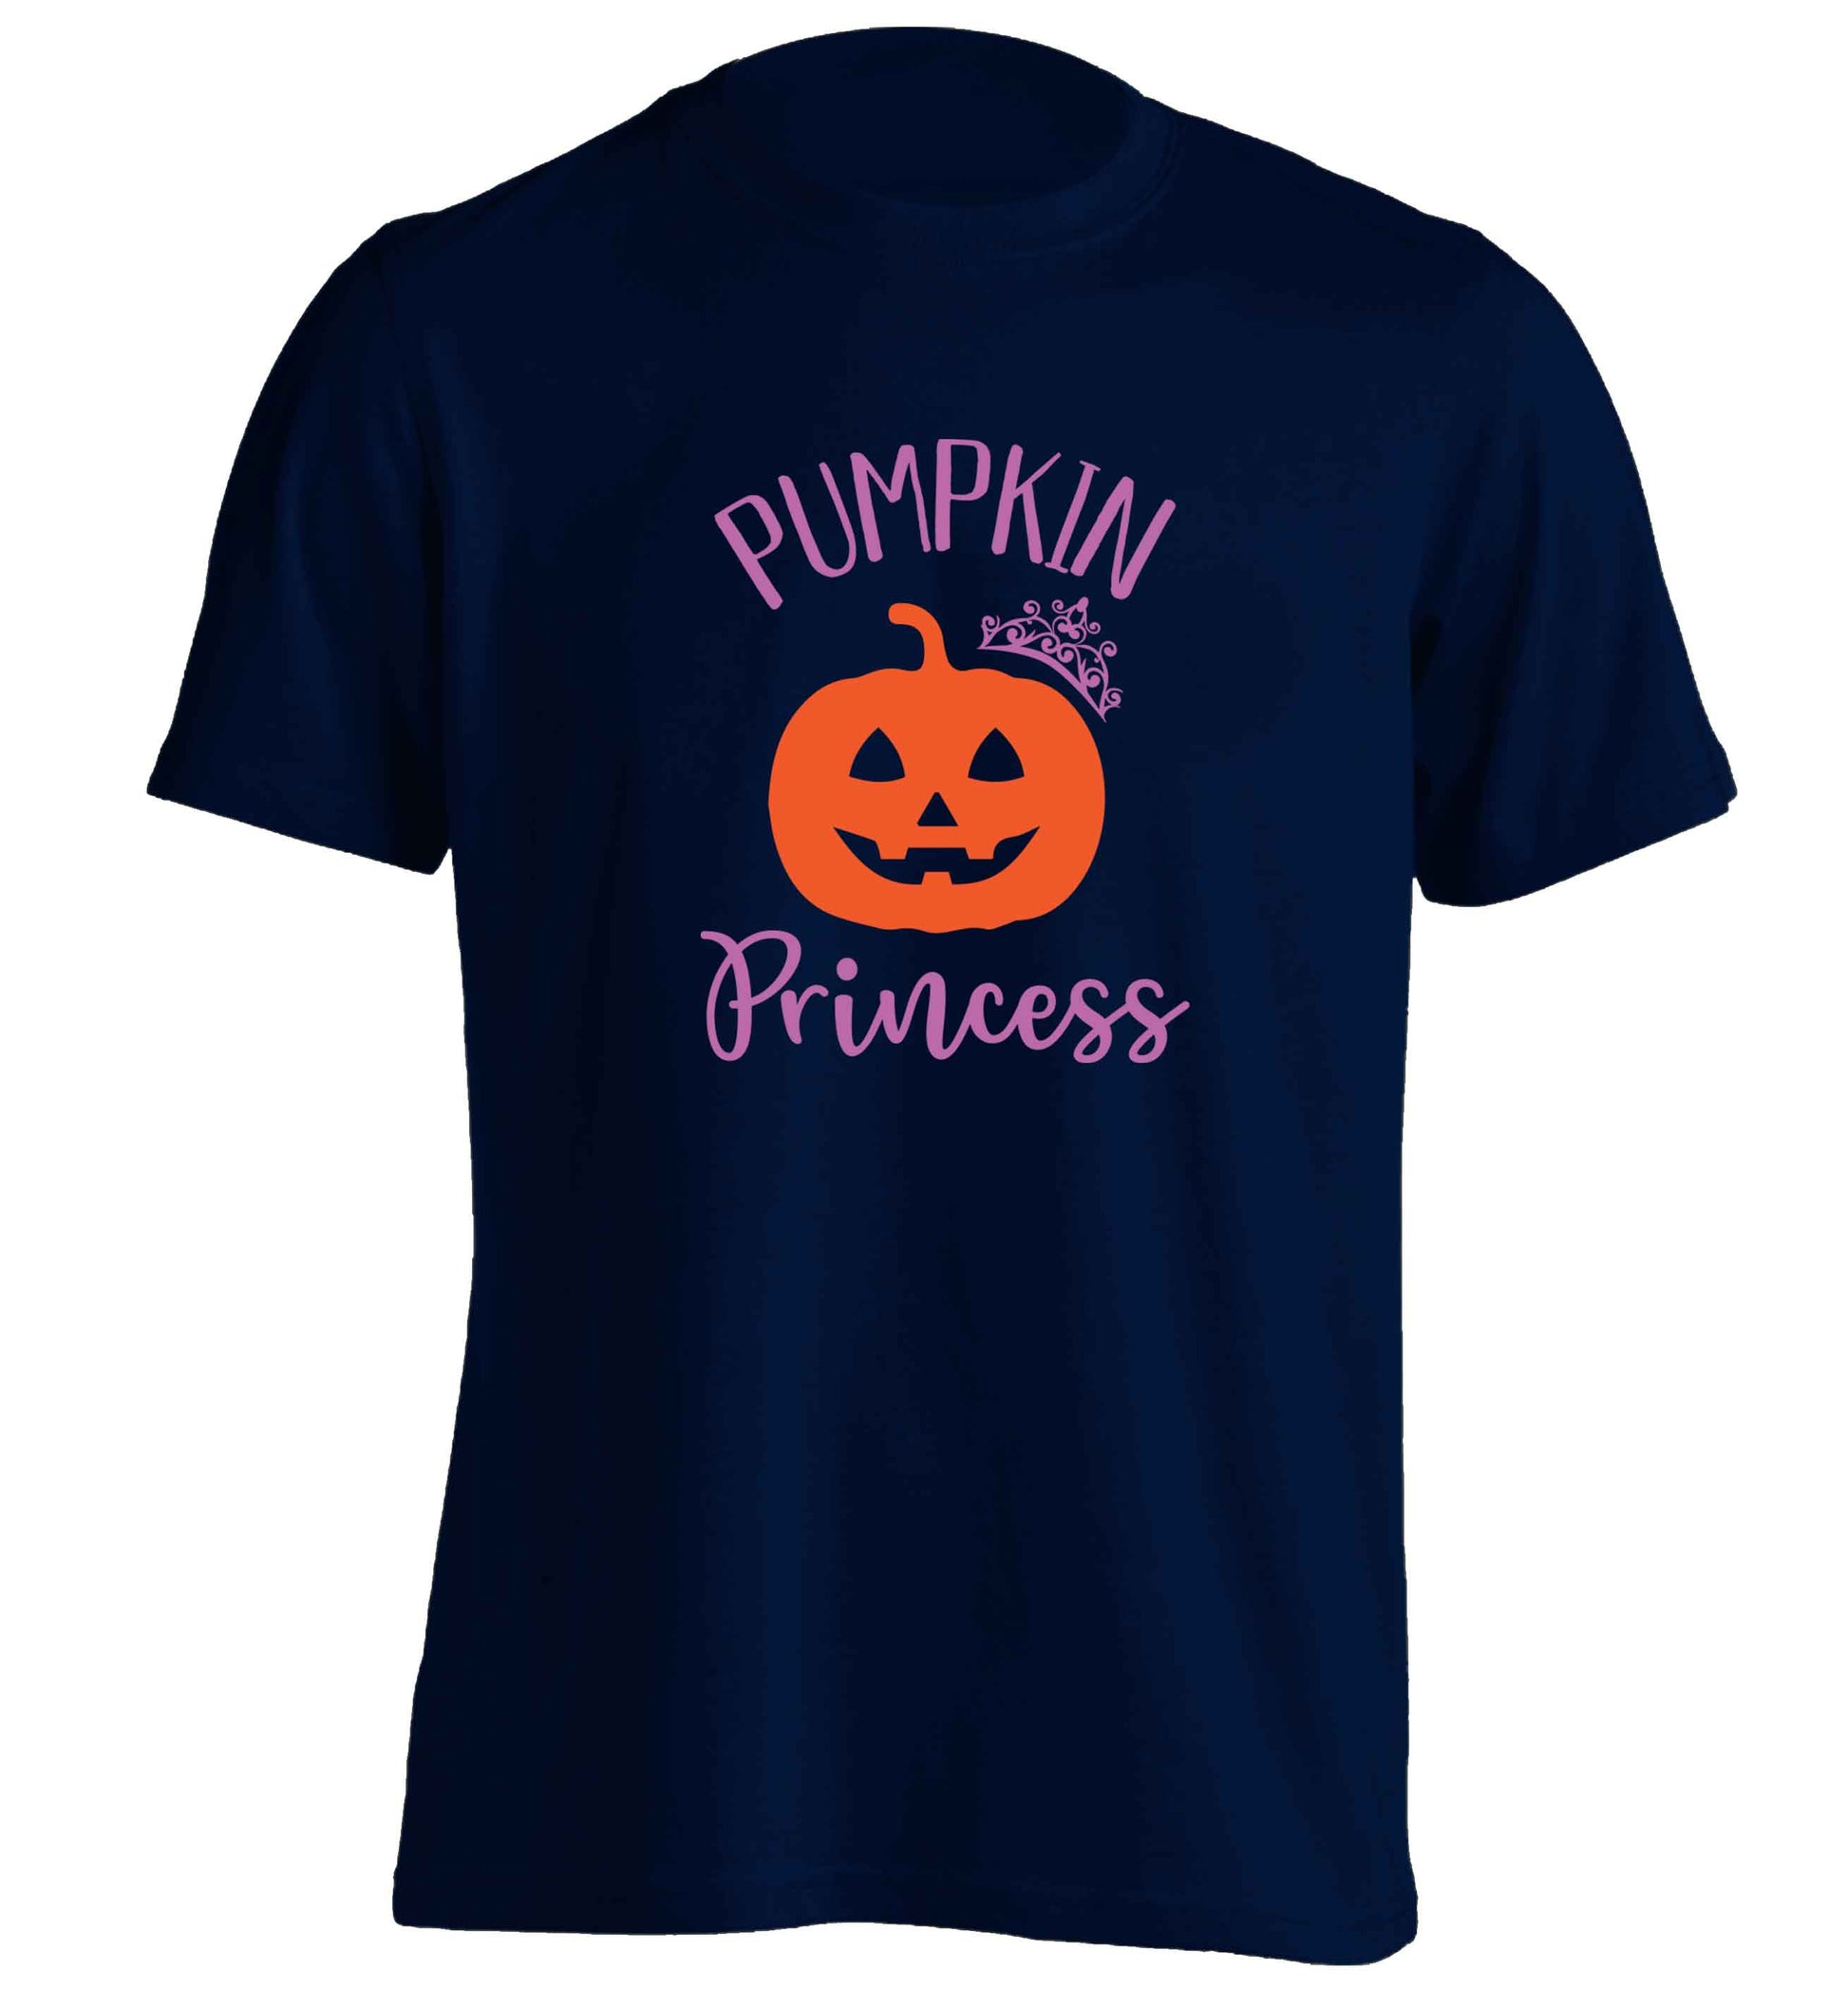 Happiness Pumpkin Spice adults unisex navy Tshirt 2XL